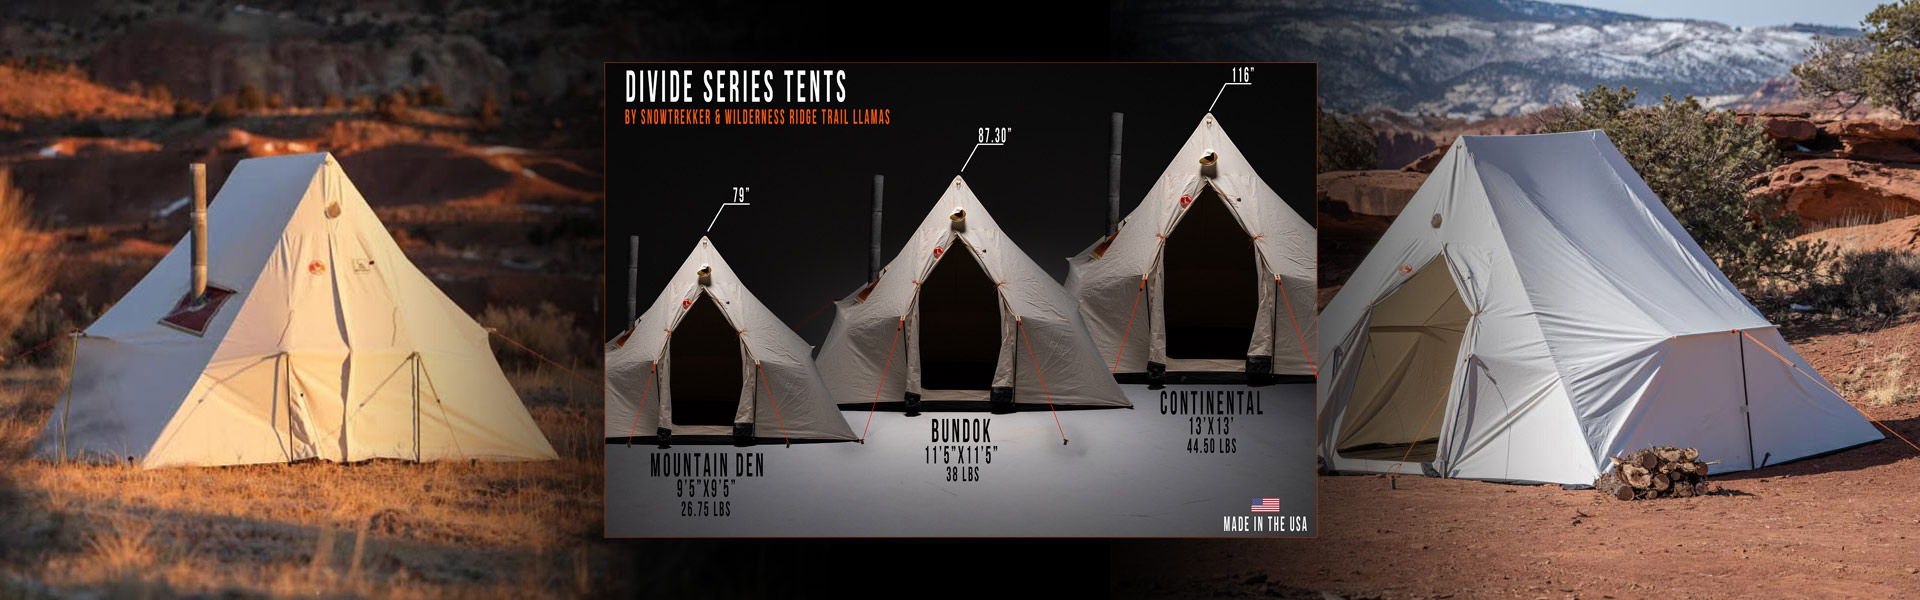 Divide Series Llama Tents